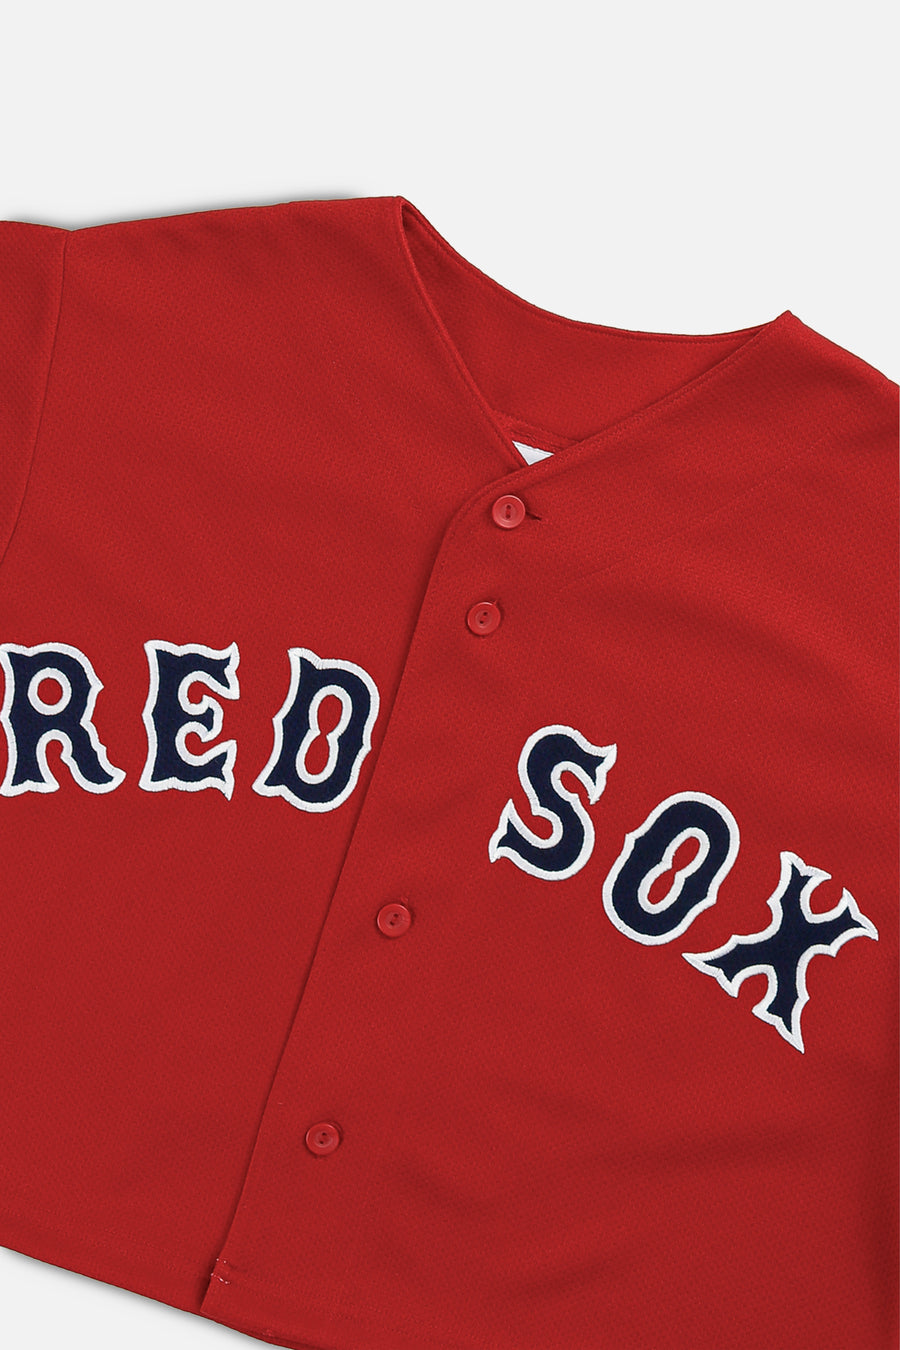 Rework Crop Boston Red Sox MLB Jersey - M